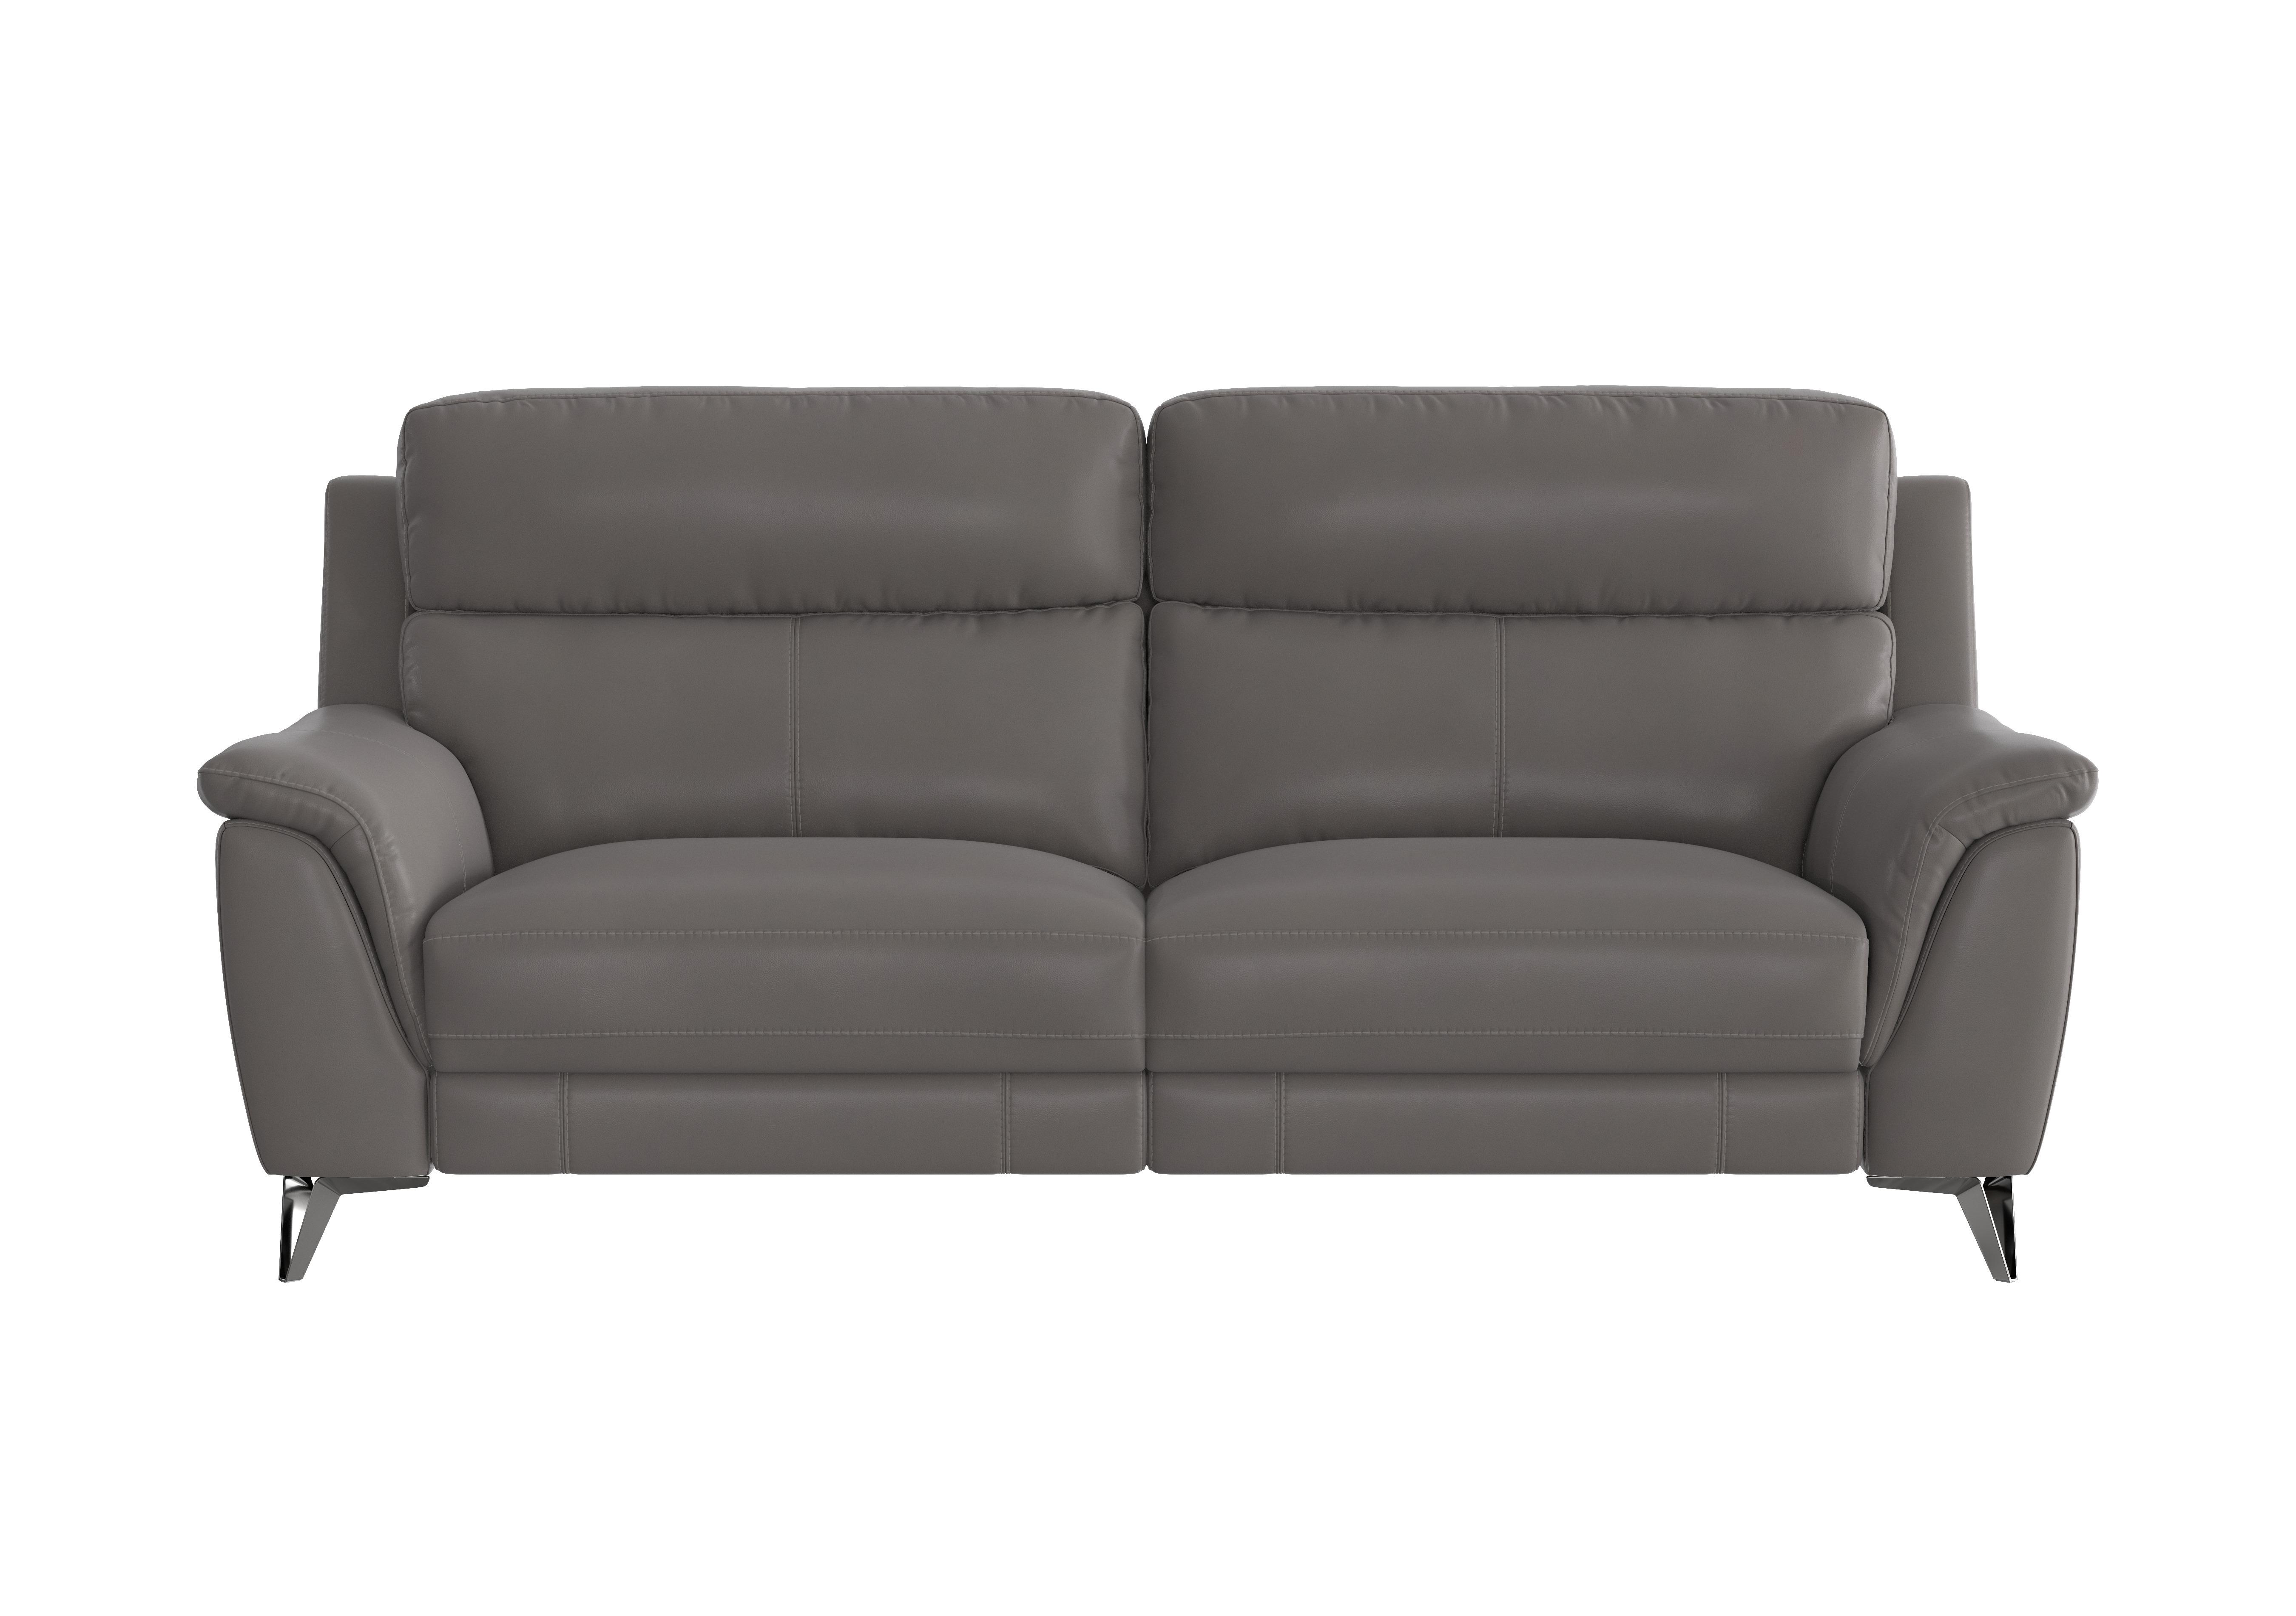 Contempo 3 Seater Leather Sofa in Bv-042e Elephant on Furniture Village